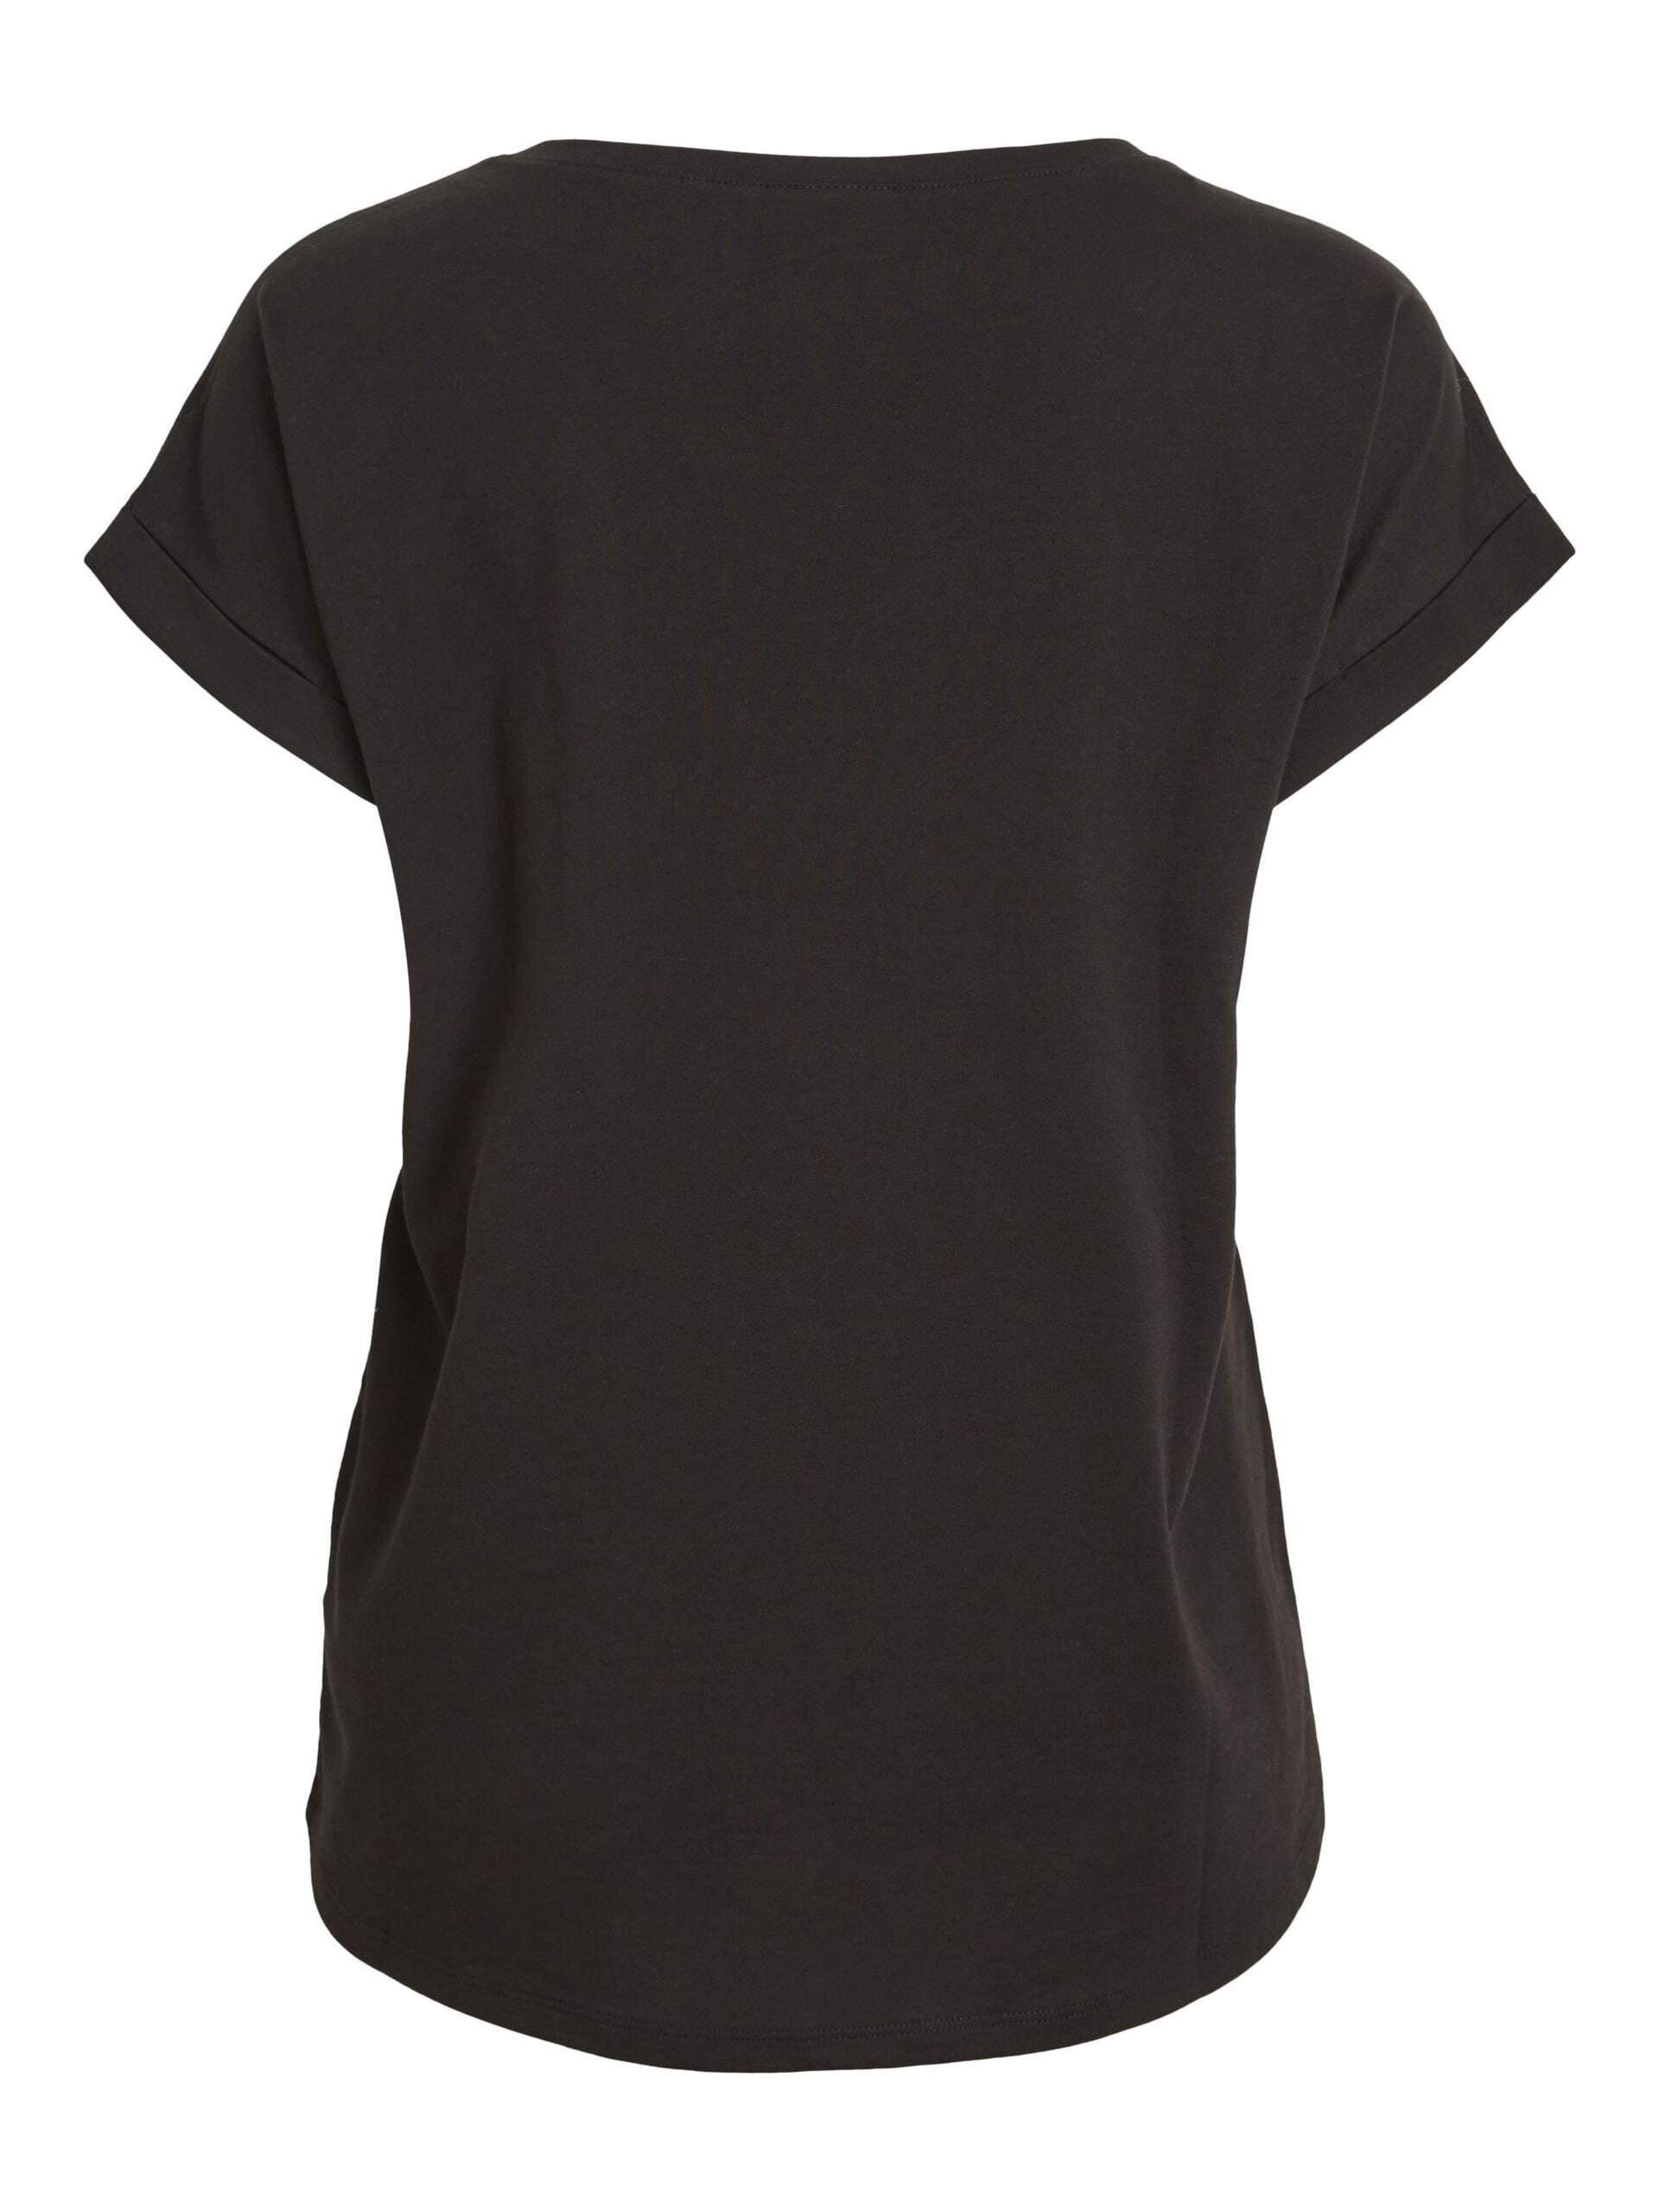 Vidreamers New Pure T-Shirt - Black